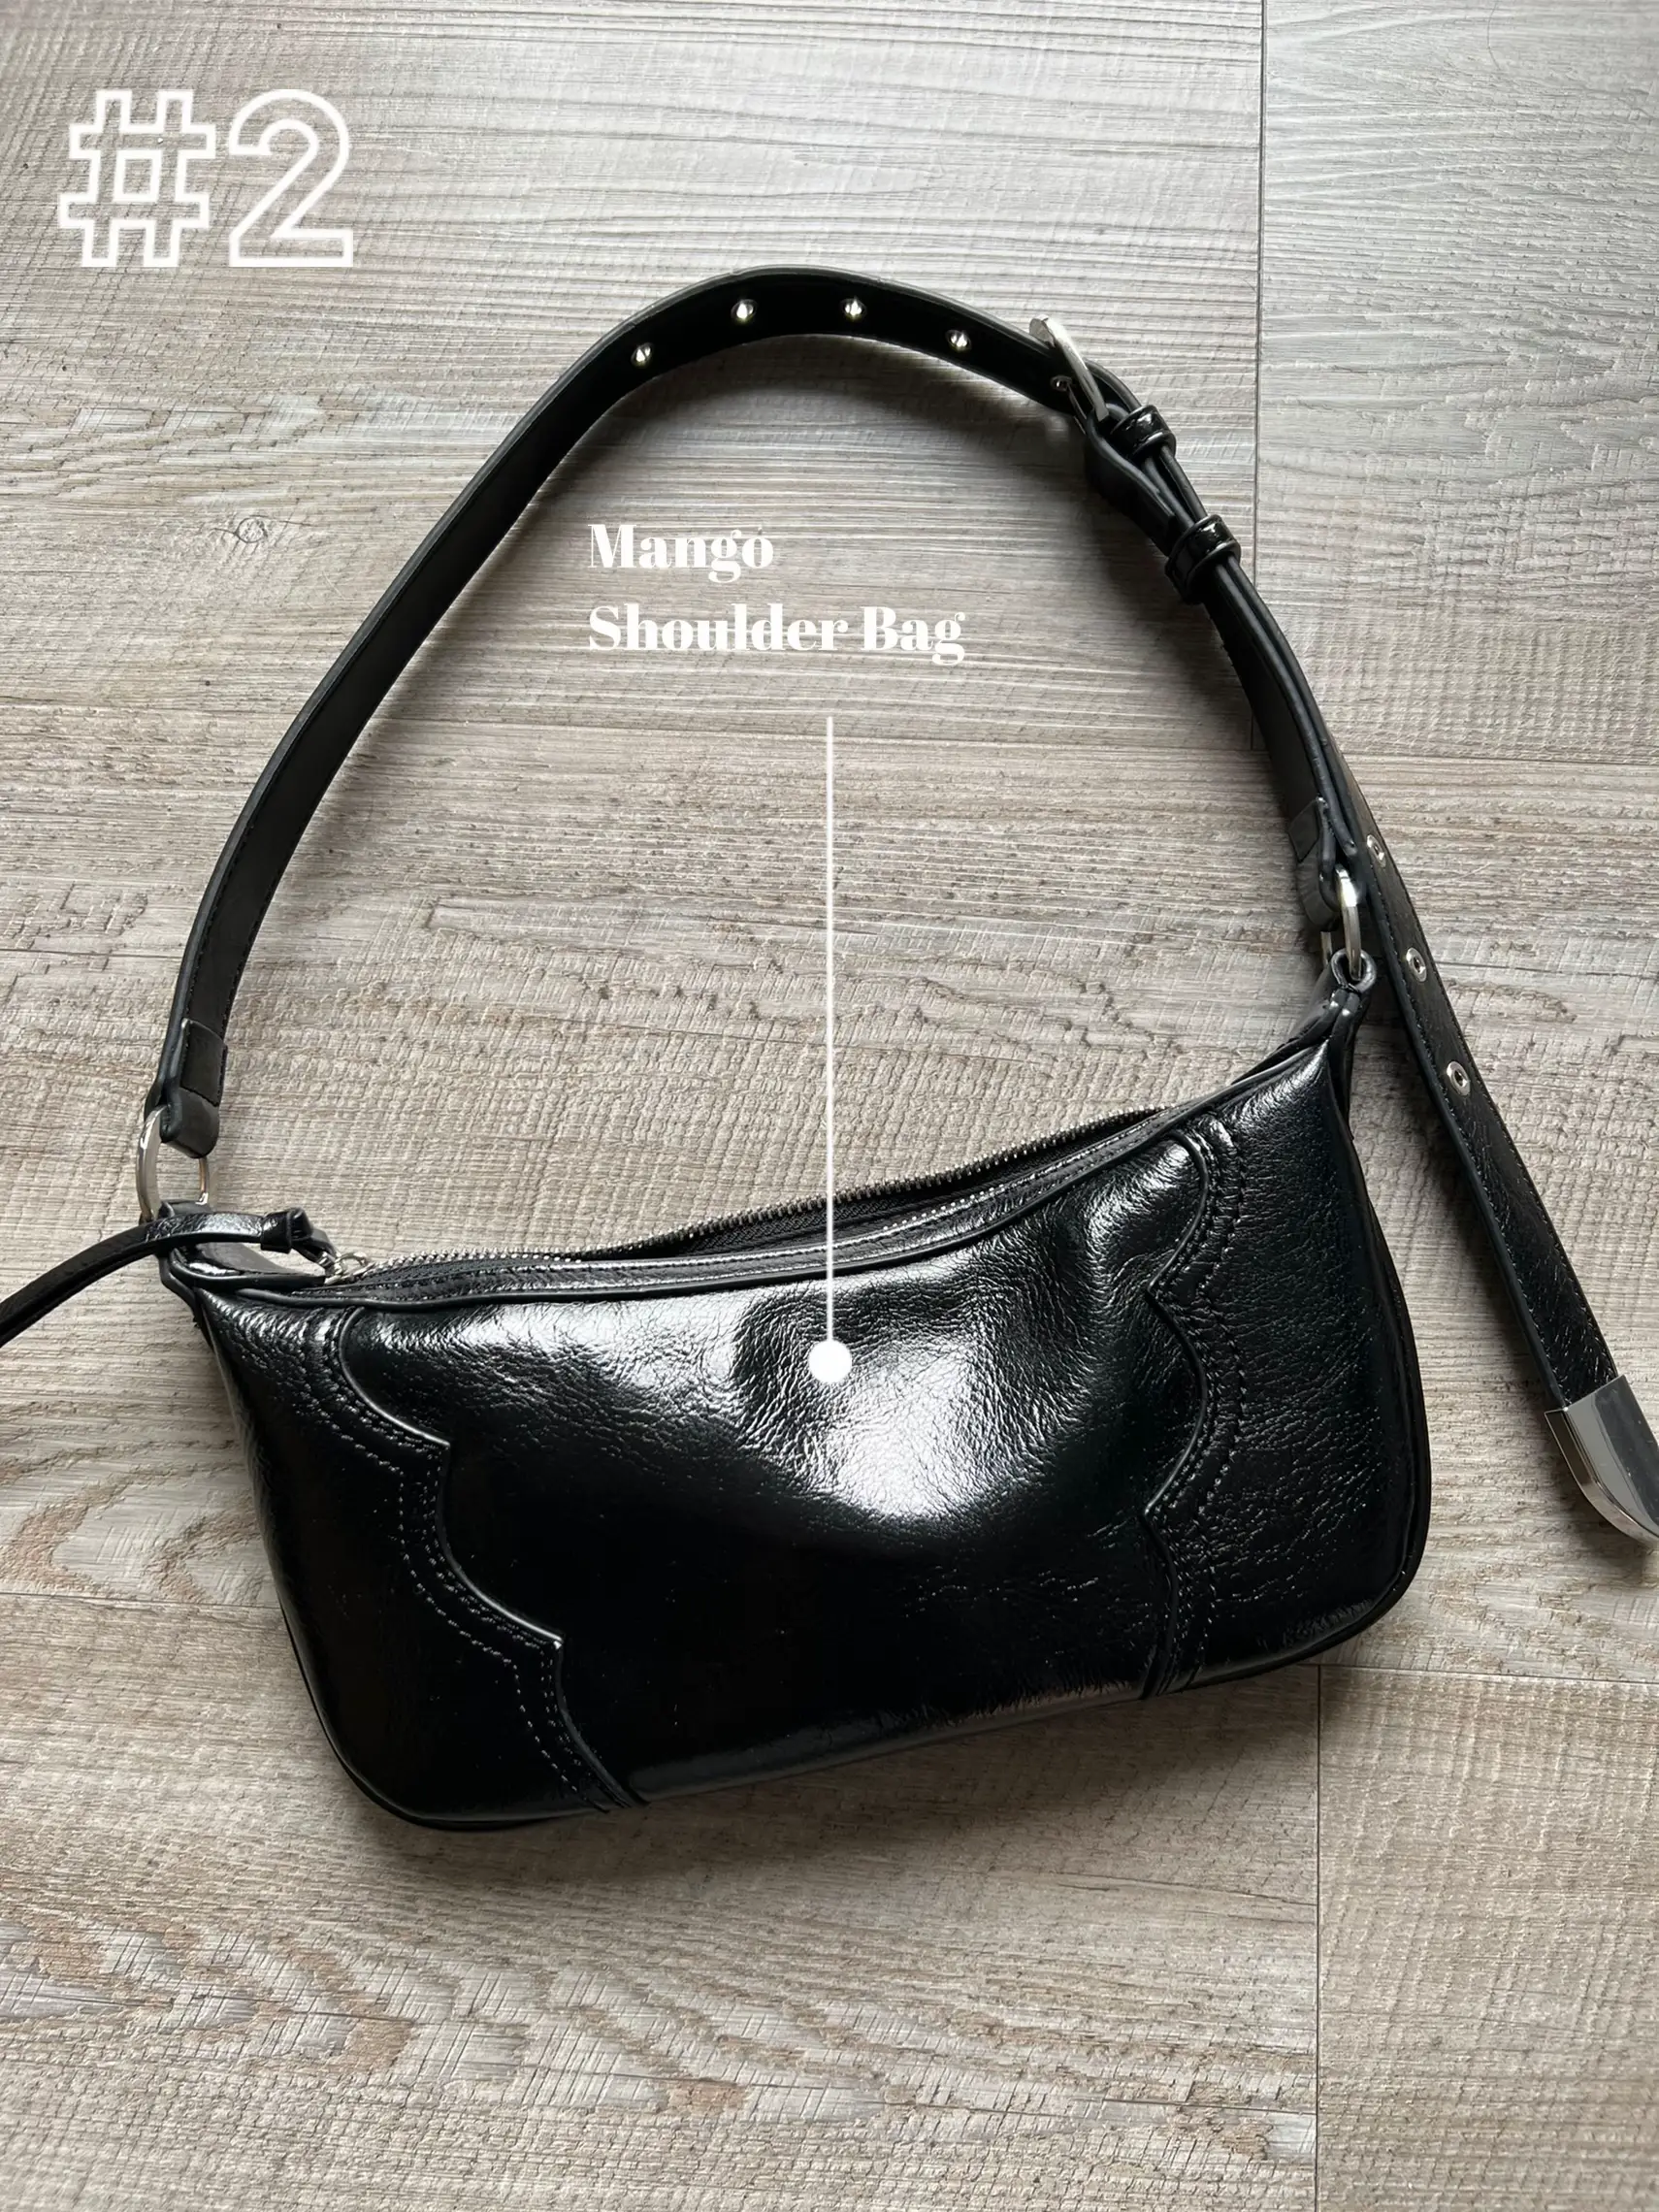 Summer Handbags: Splurge or Save? - OLIVIA MAY BELL